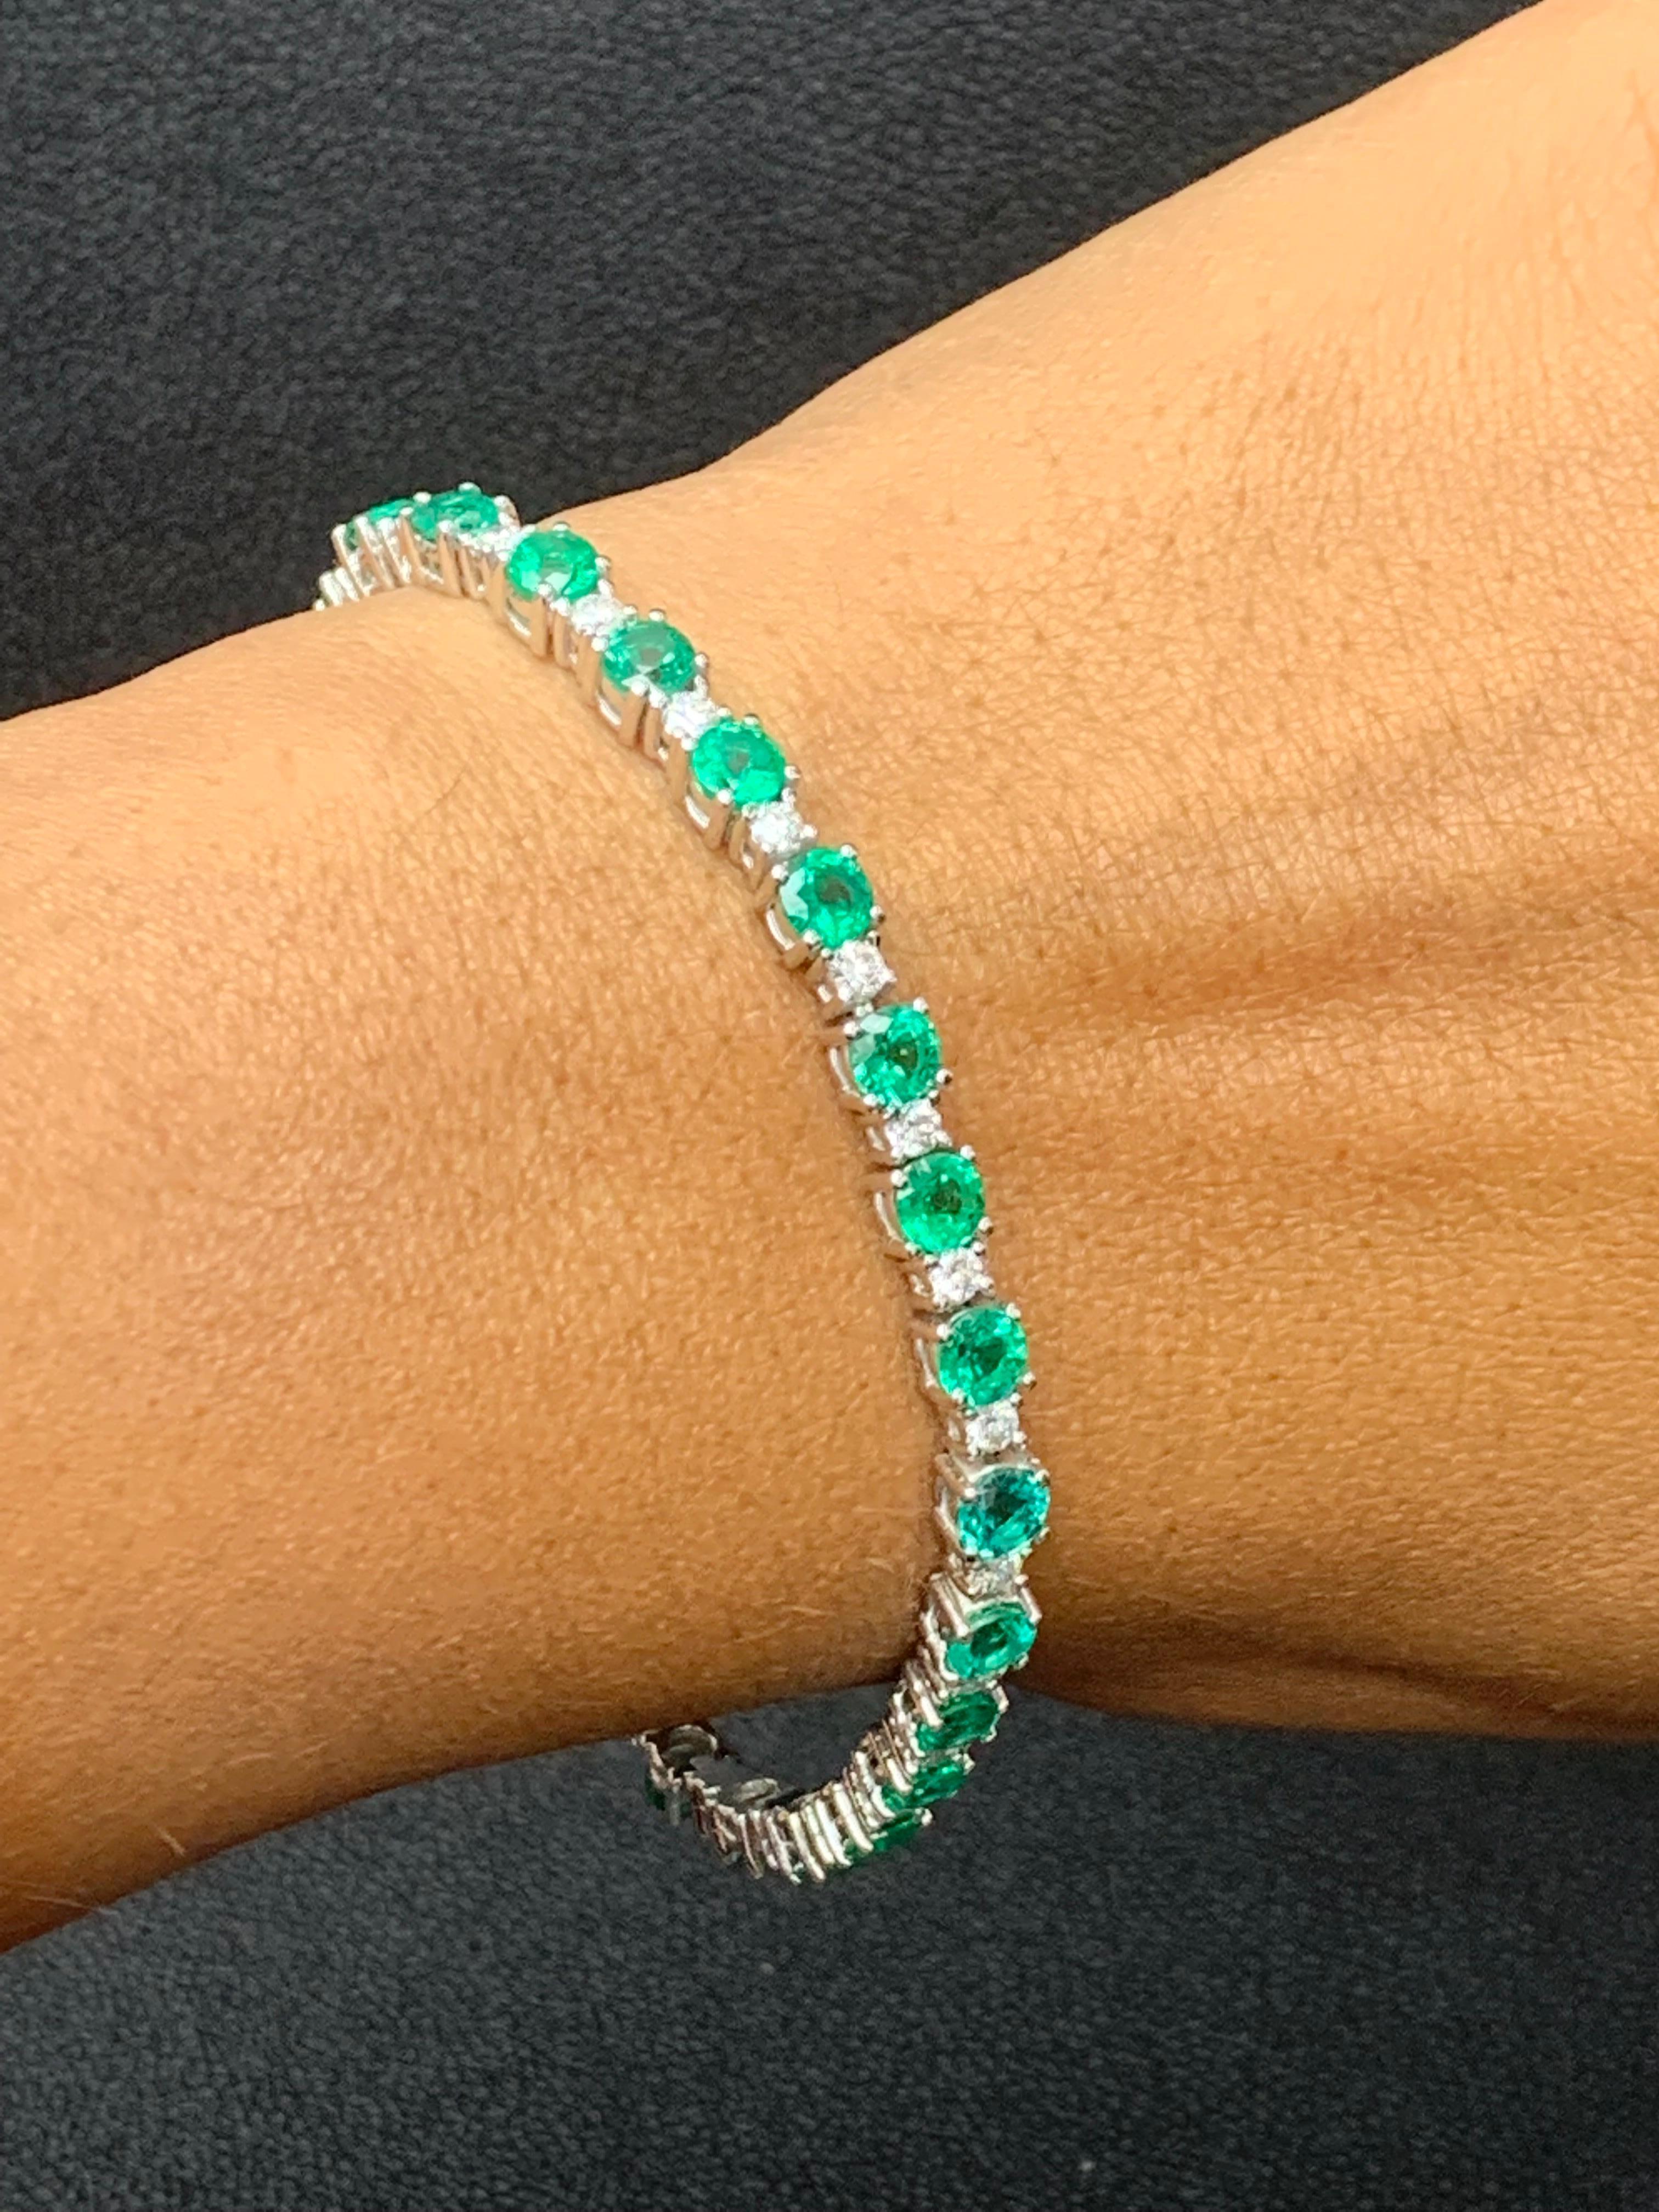 Women's 6.34 Carat Green Emerald and Diamond Tennis Bracelet in 14K White Gold For Sale